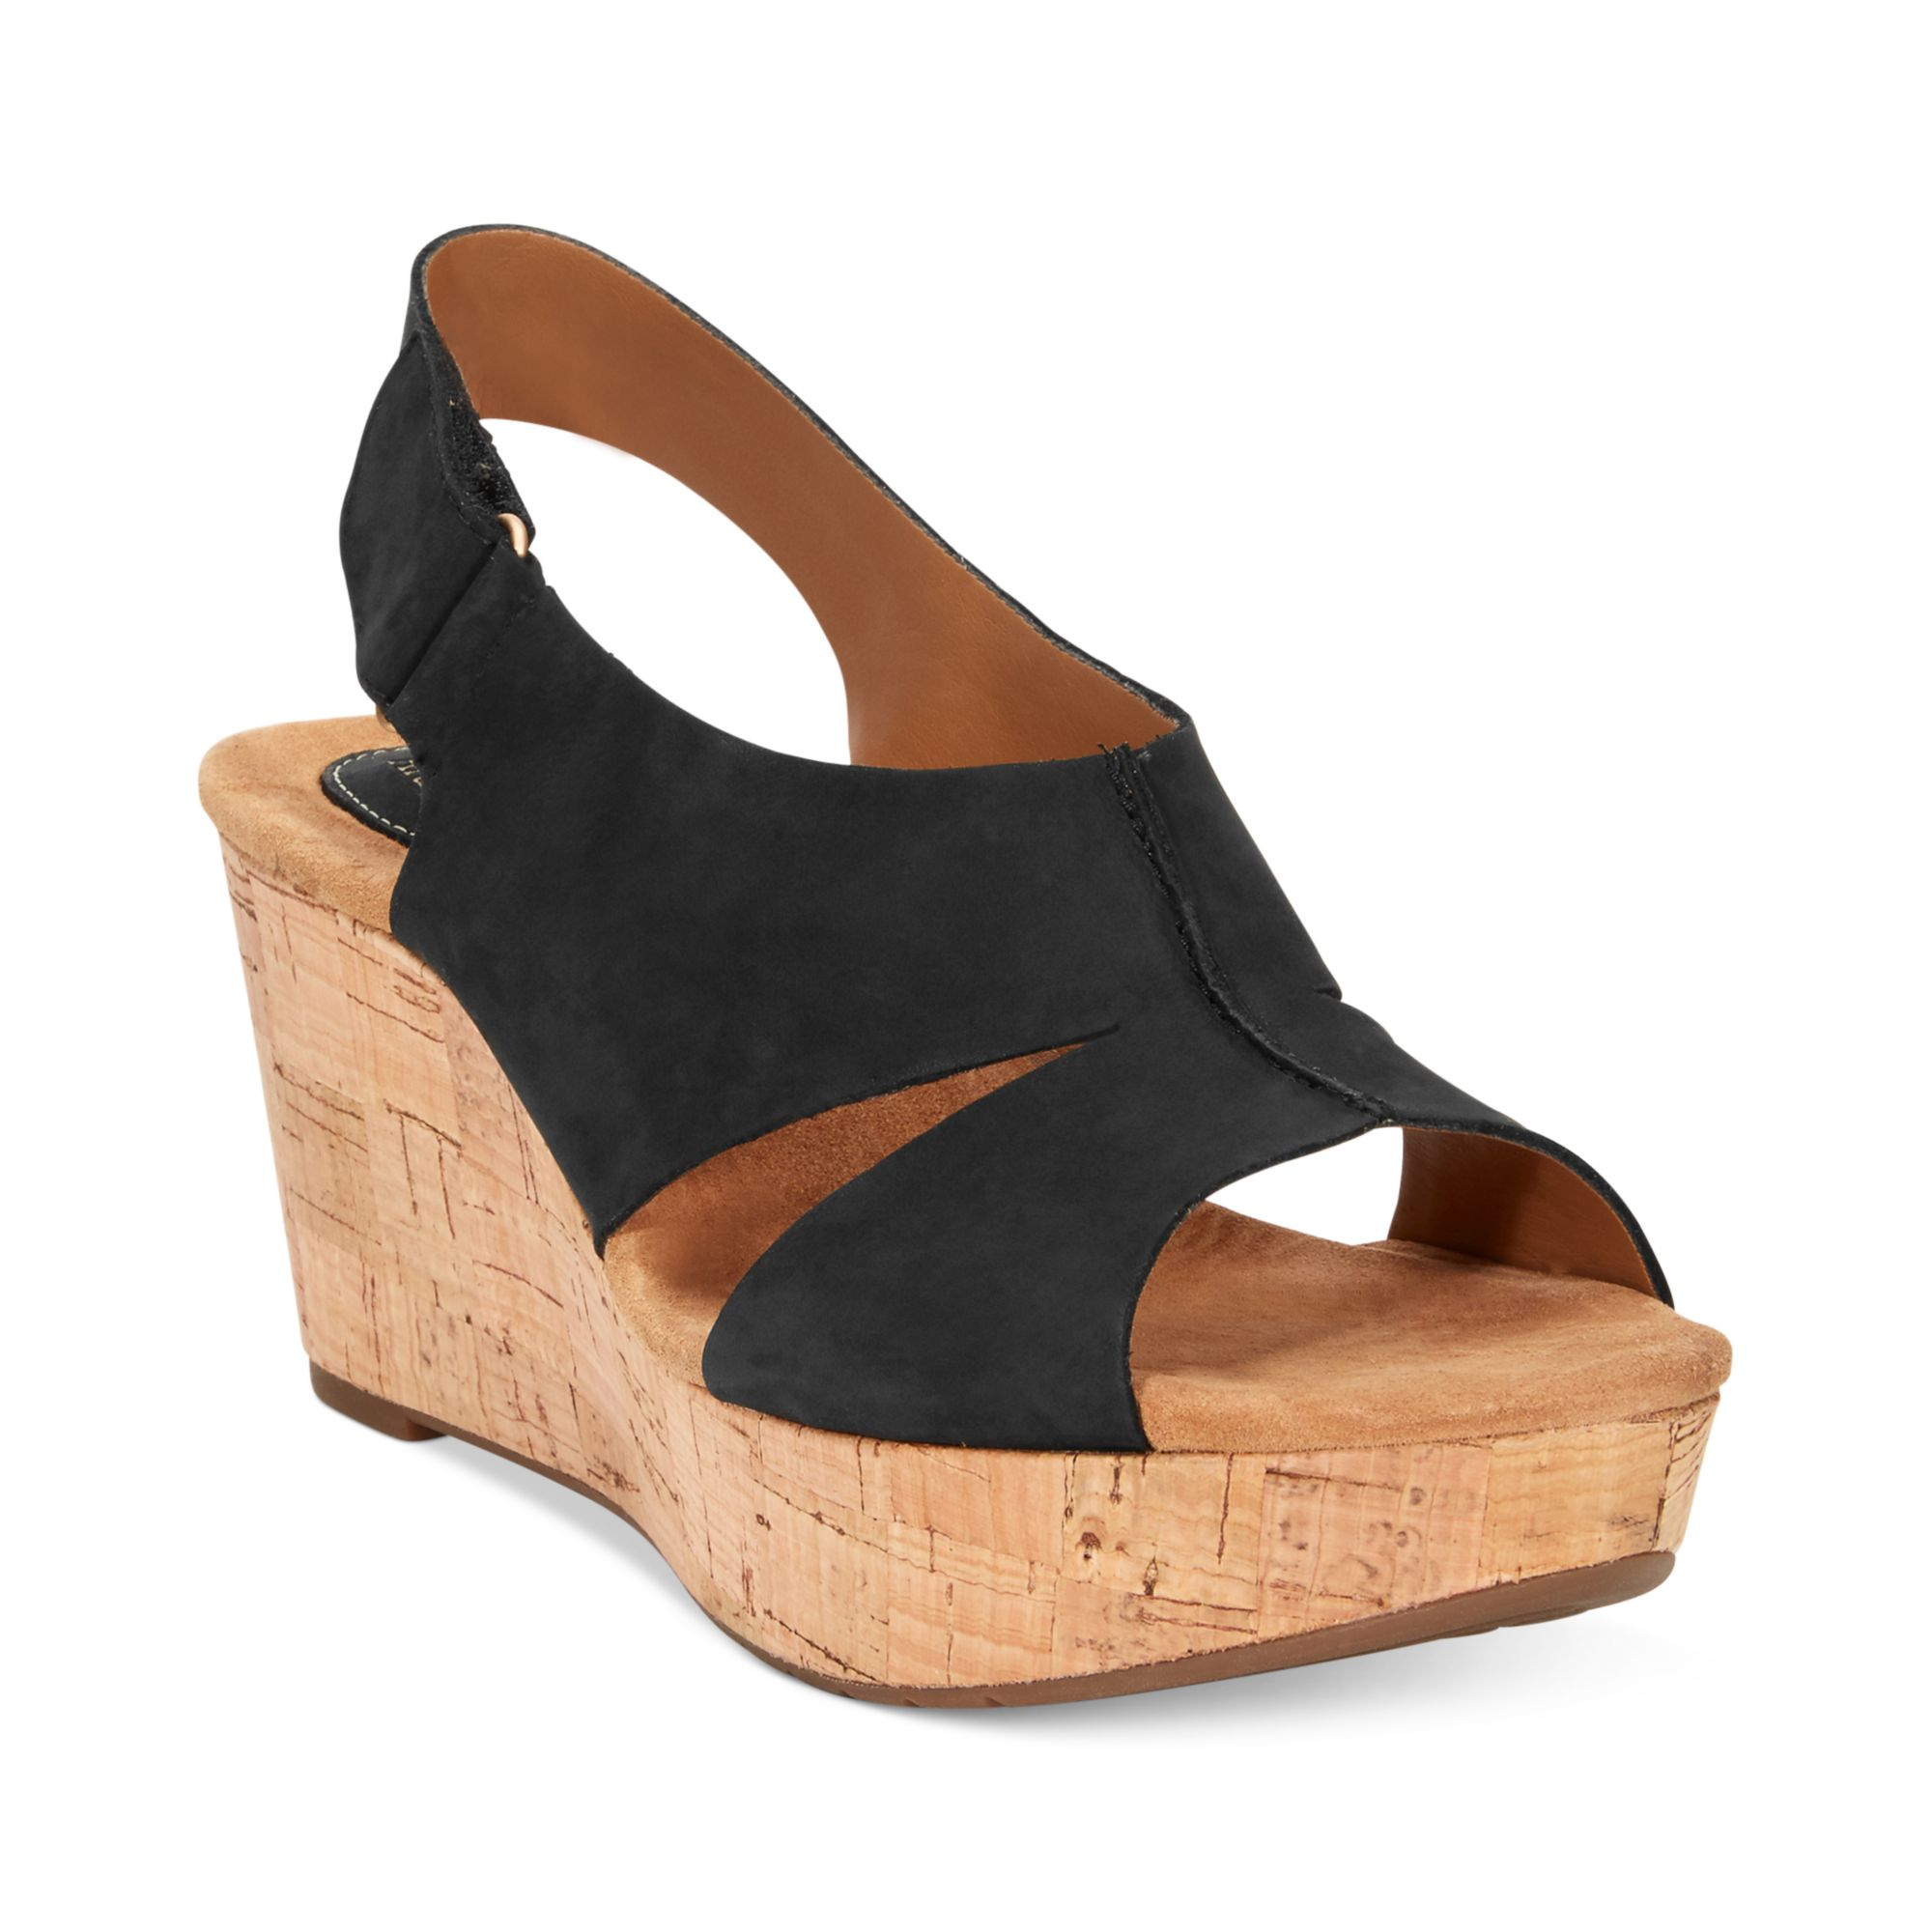 clarks artisan platform sandals